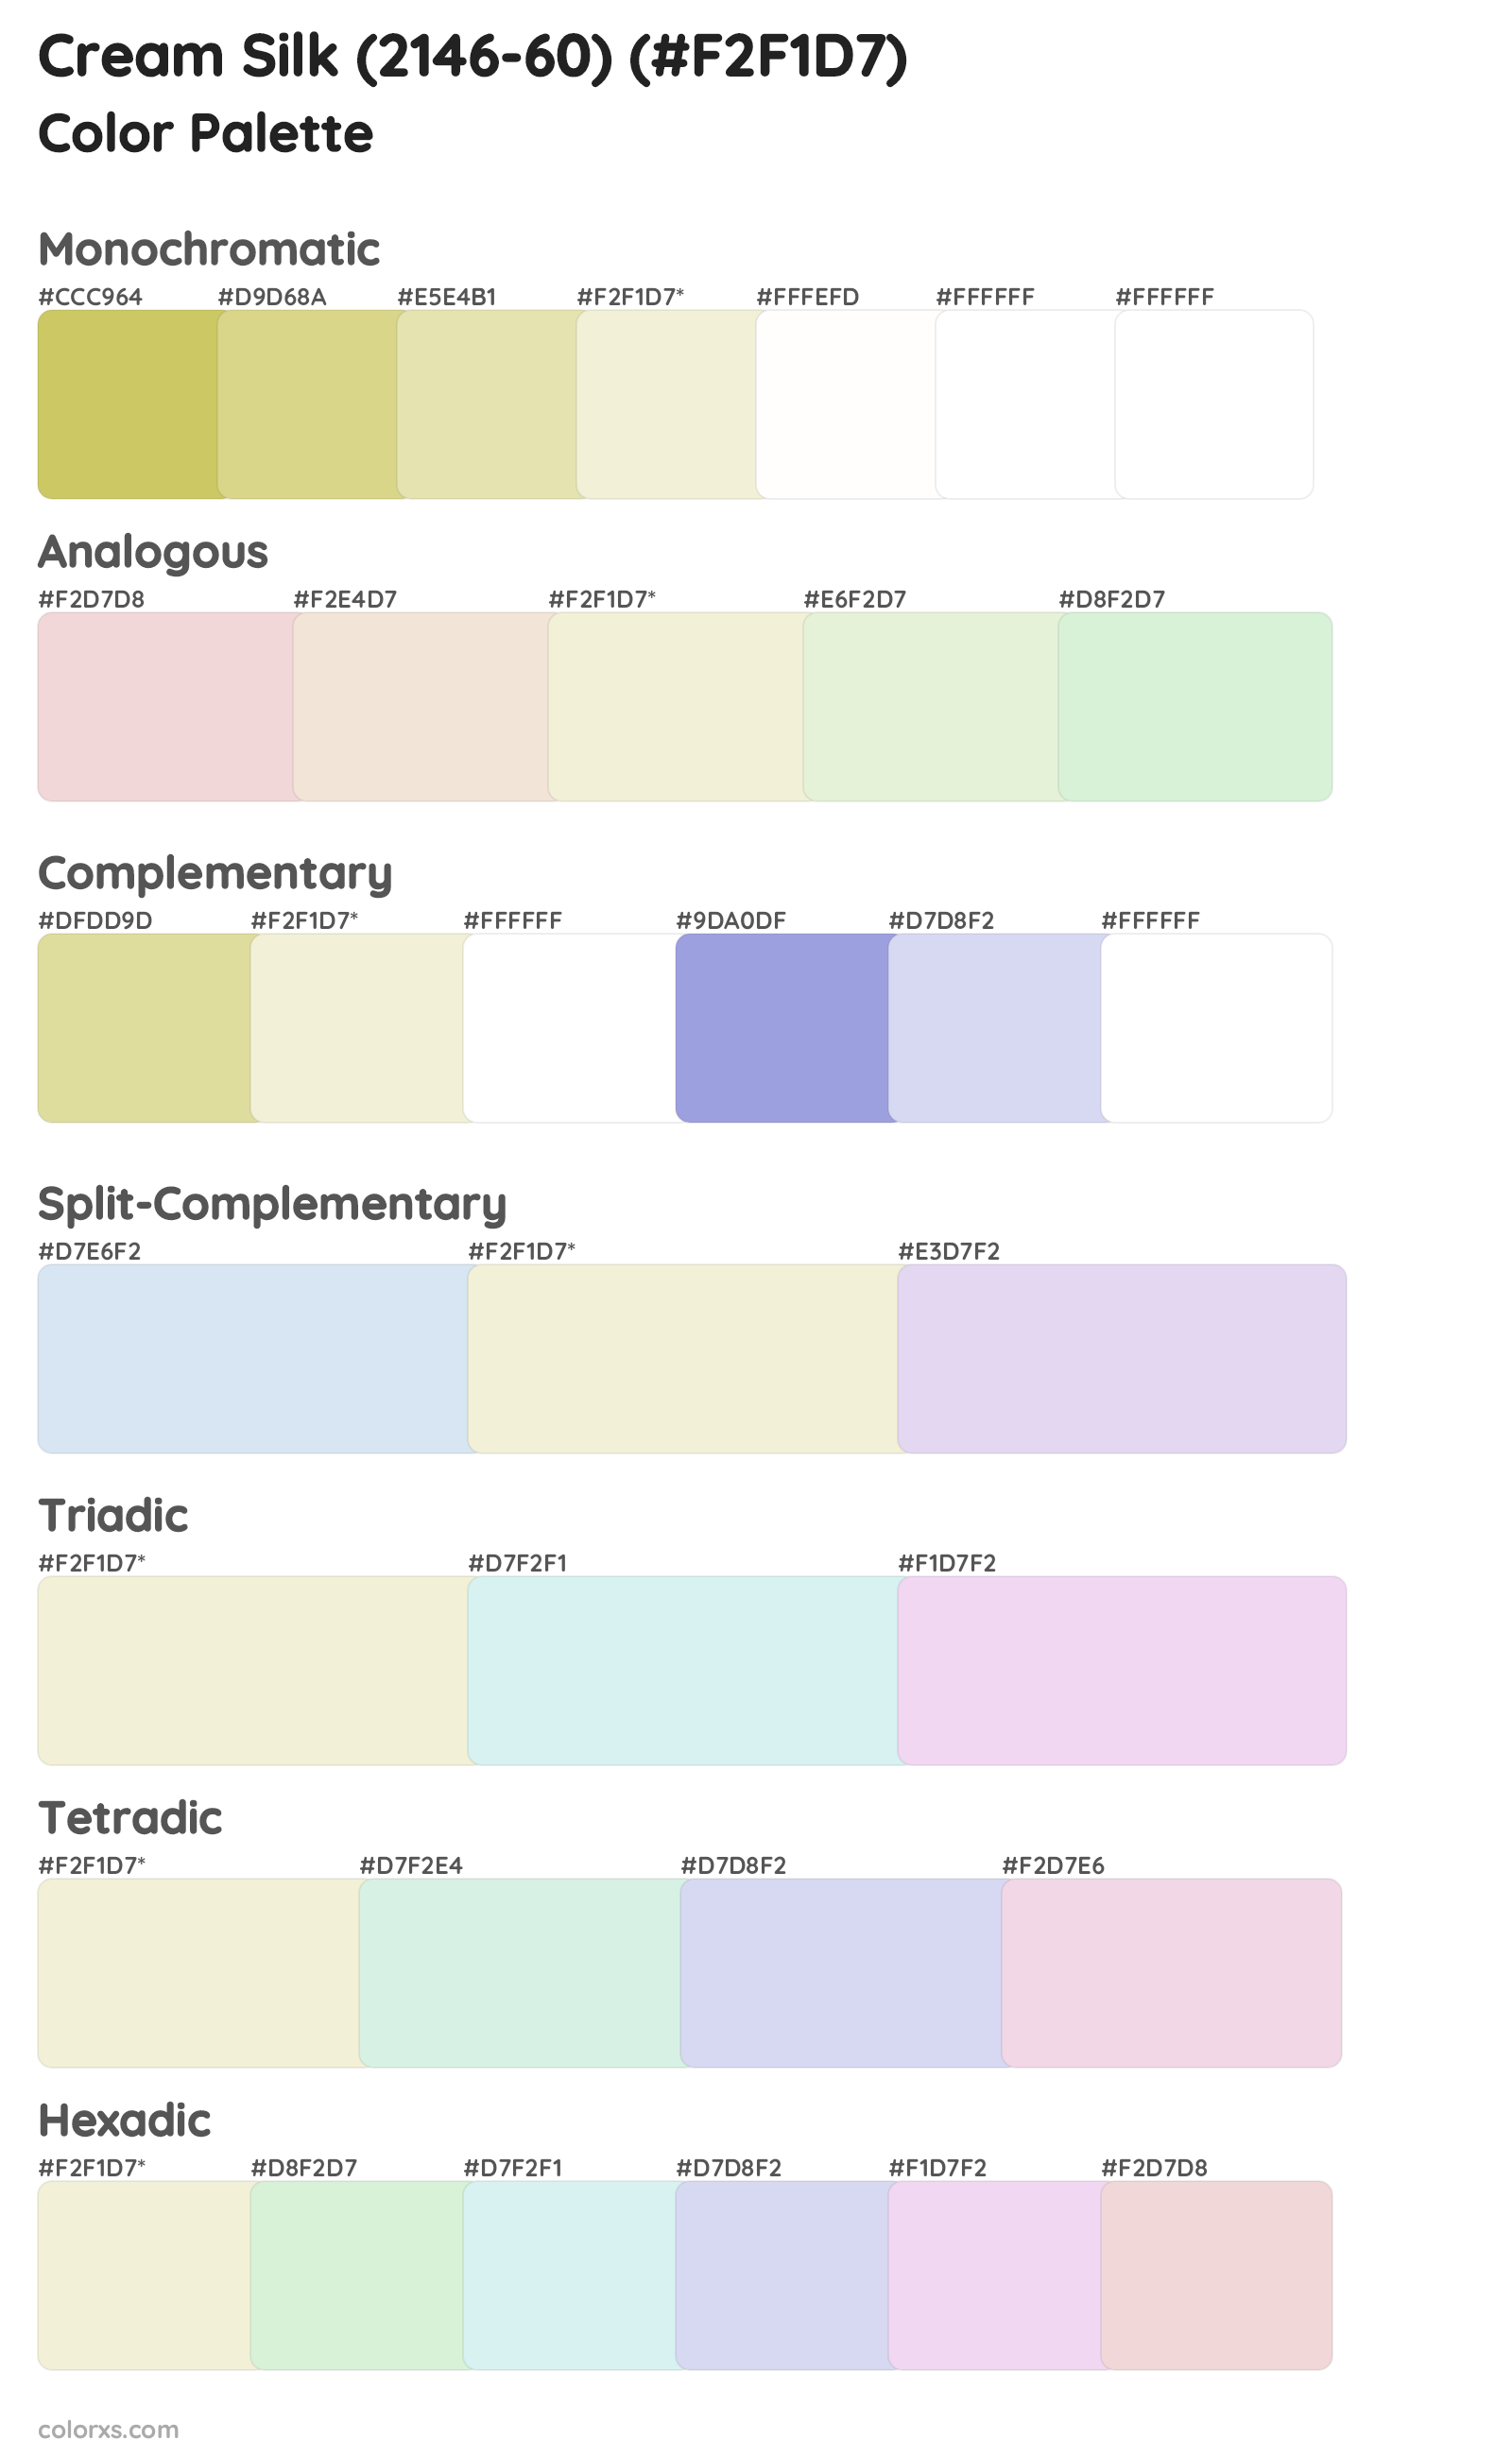 Cream Silk (2146-60) Color Scheme Palettes